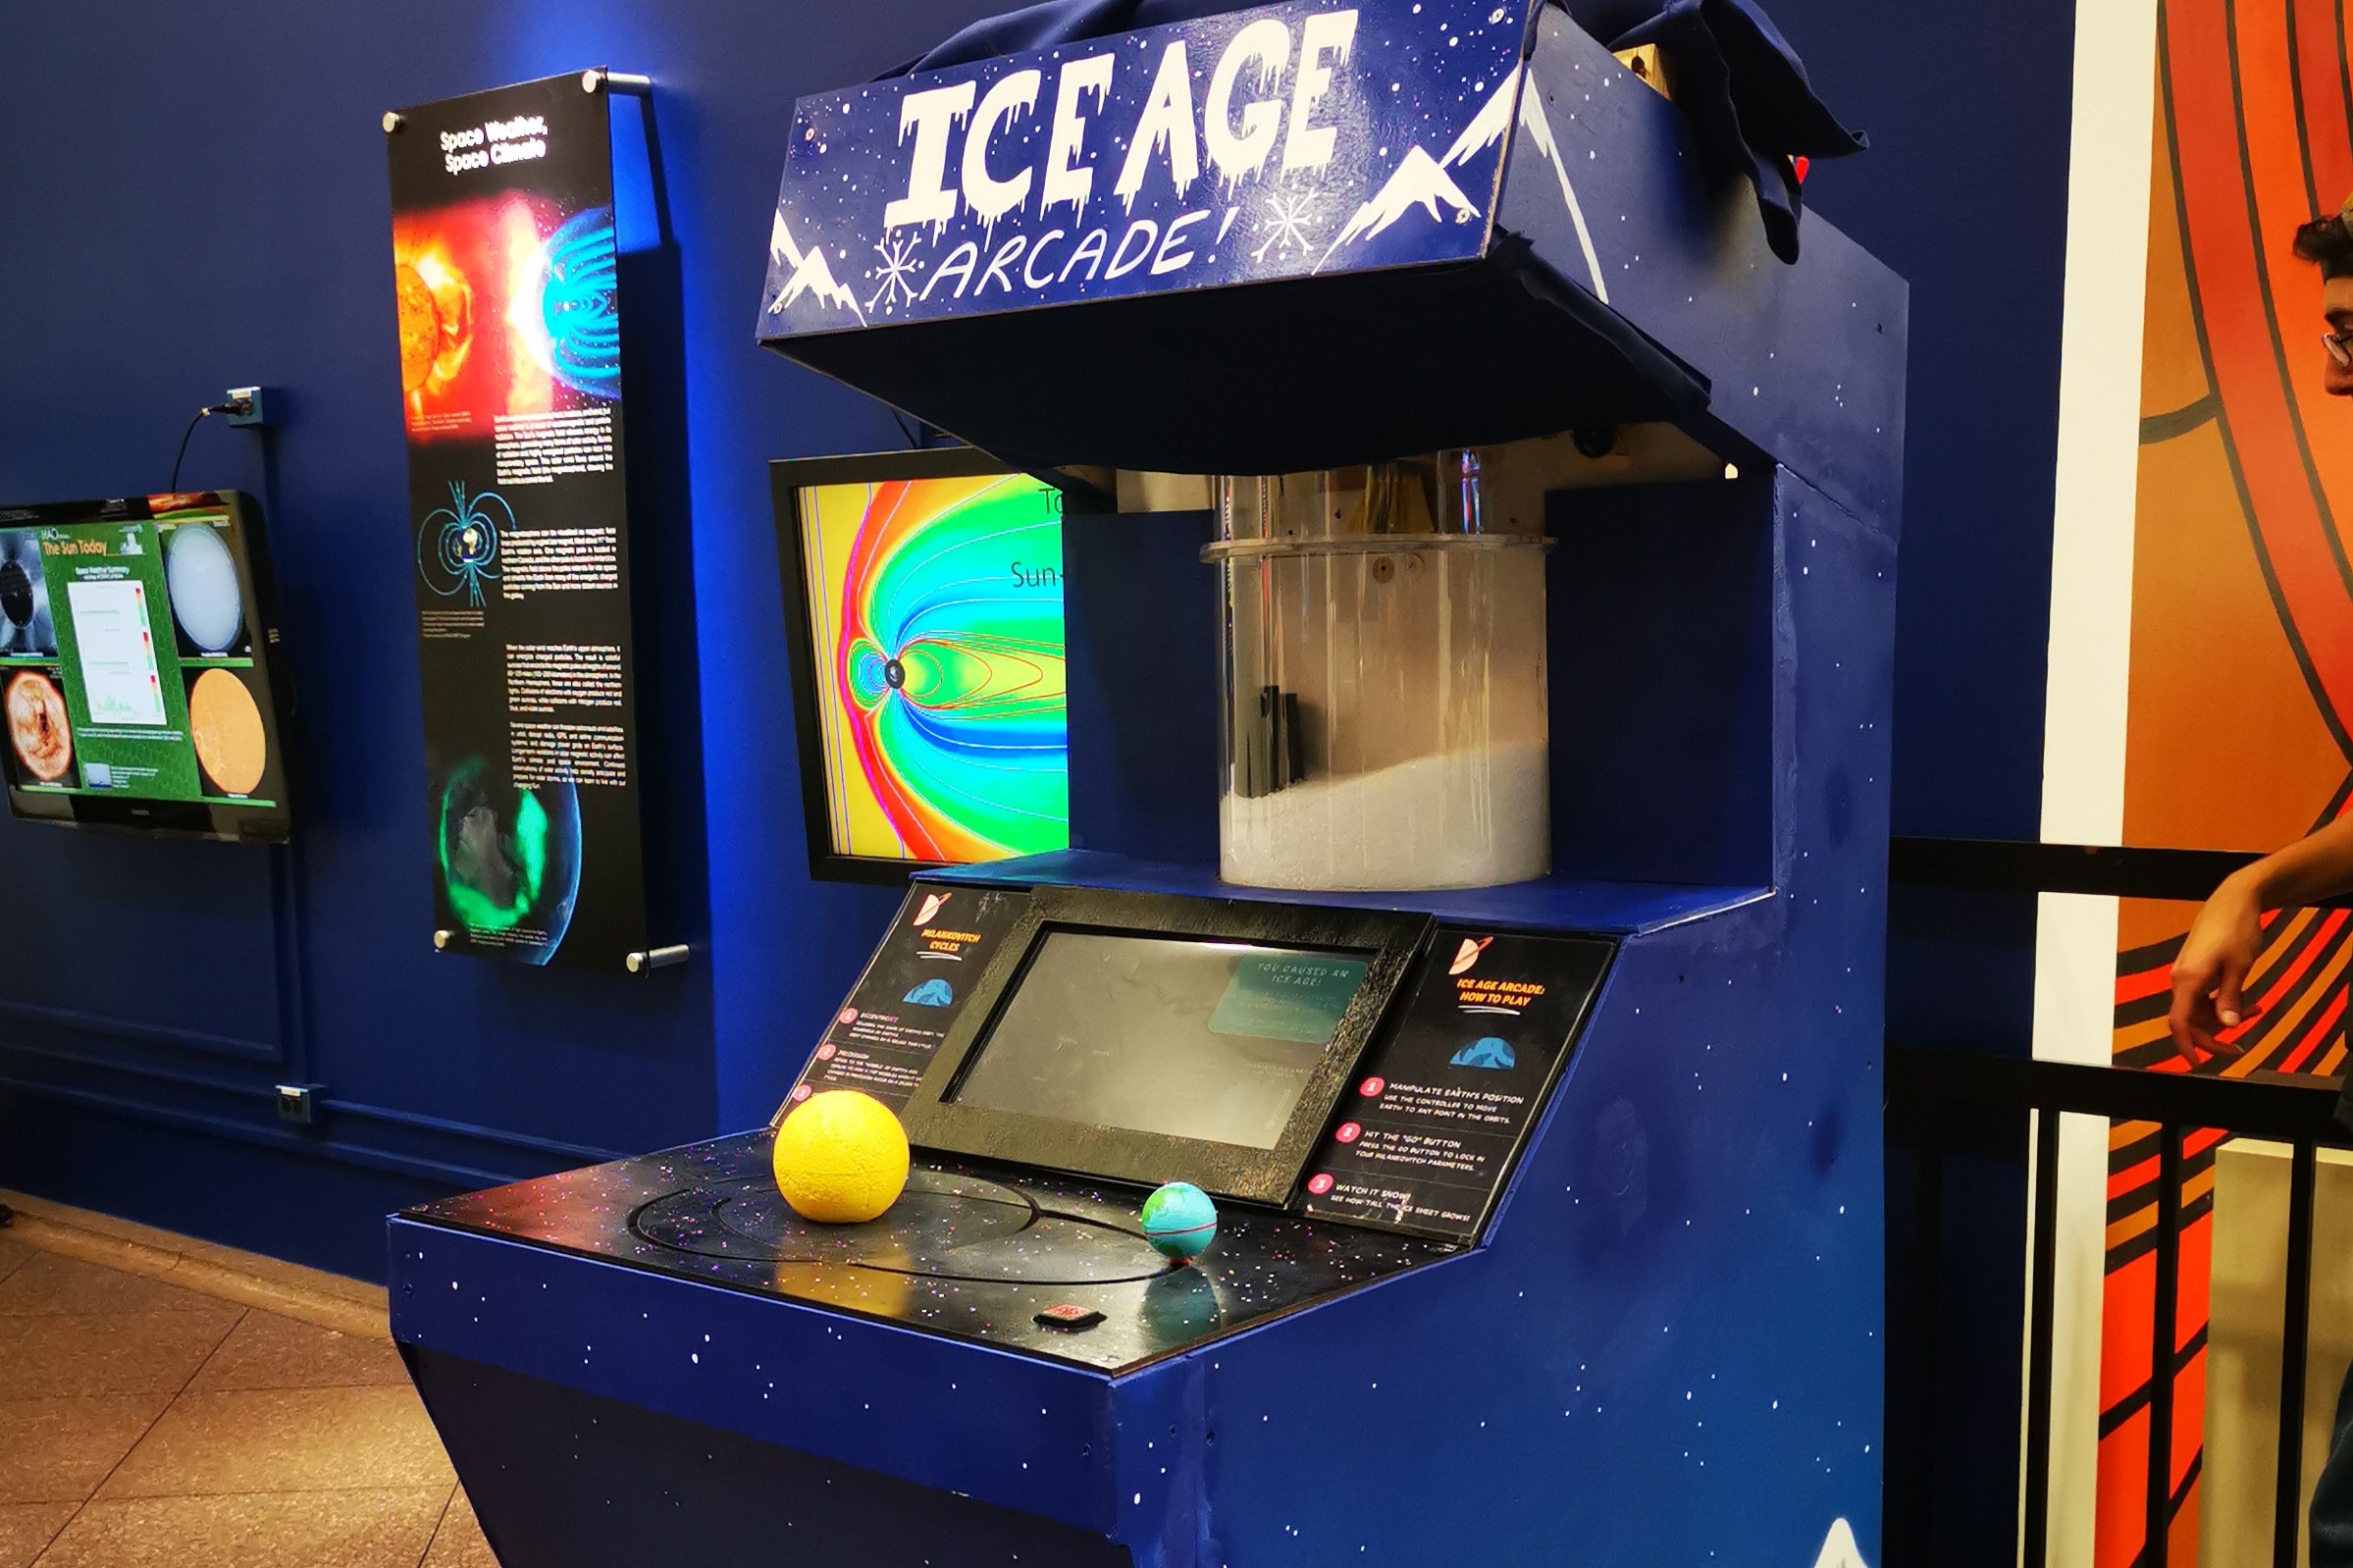 Ice-Age Arcade